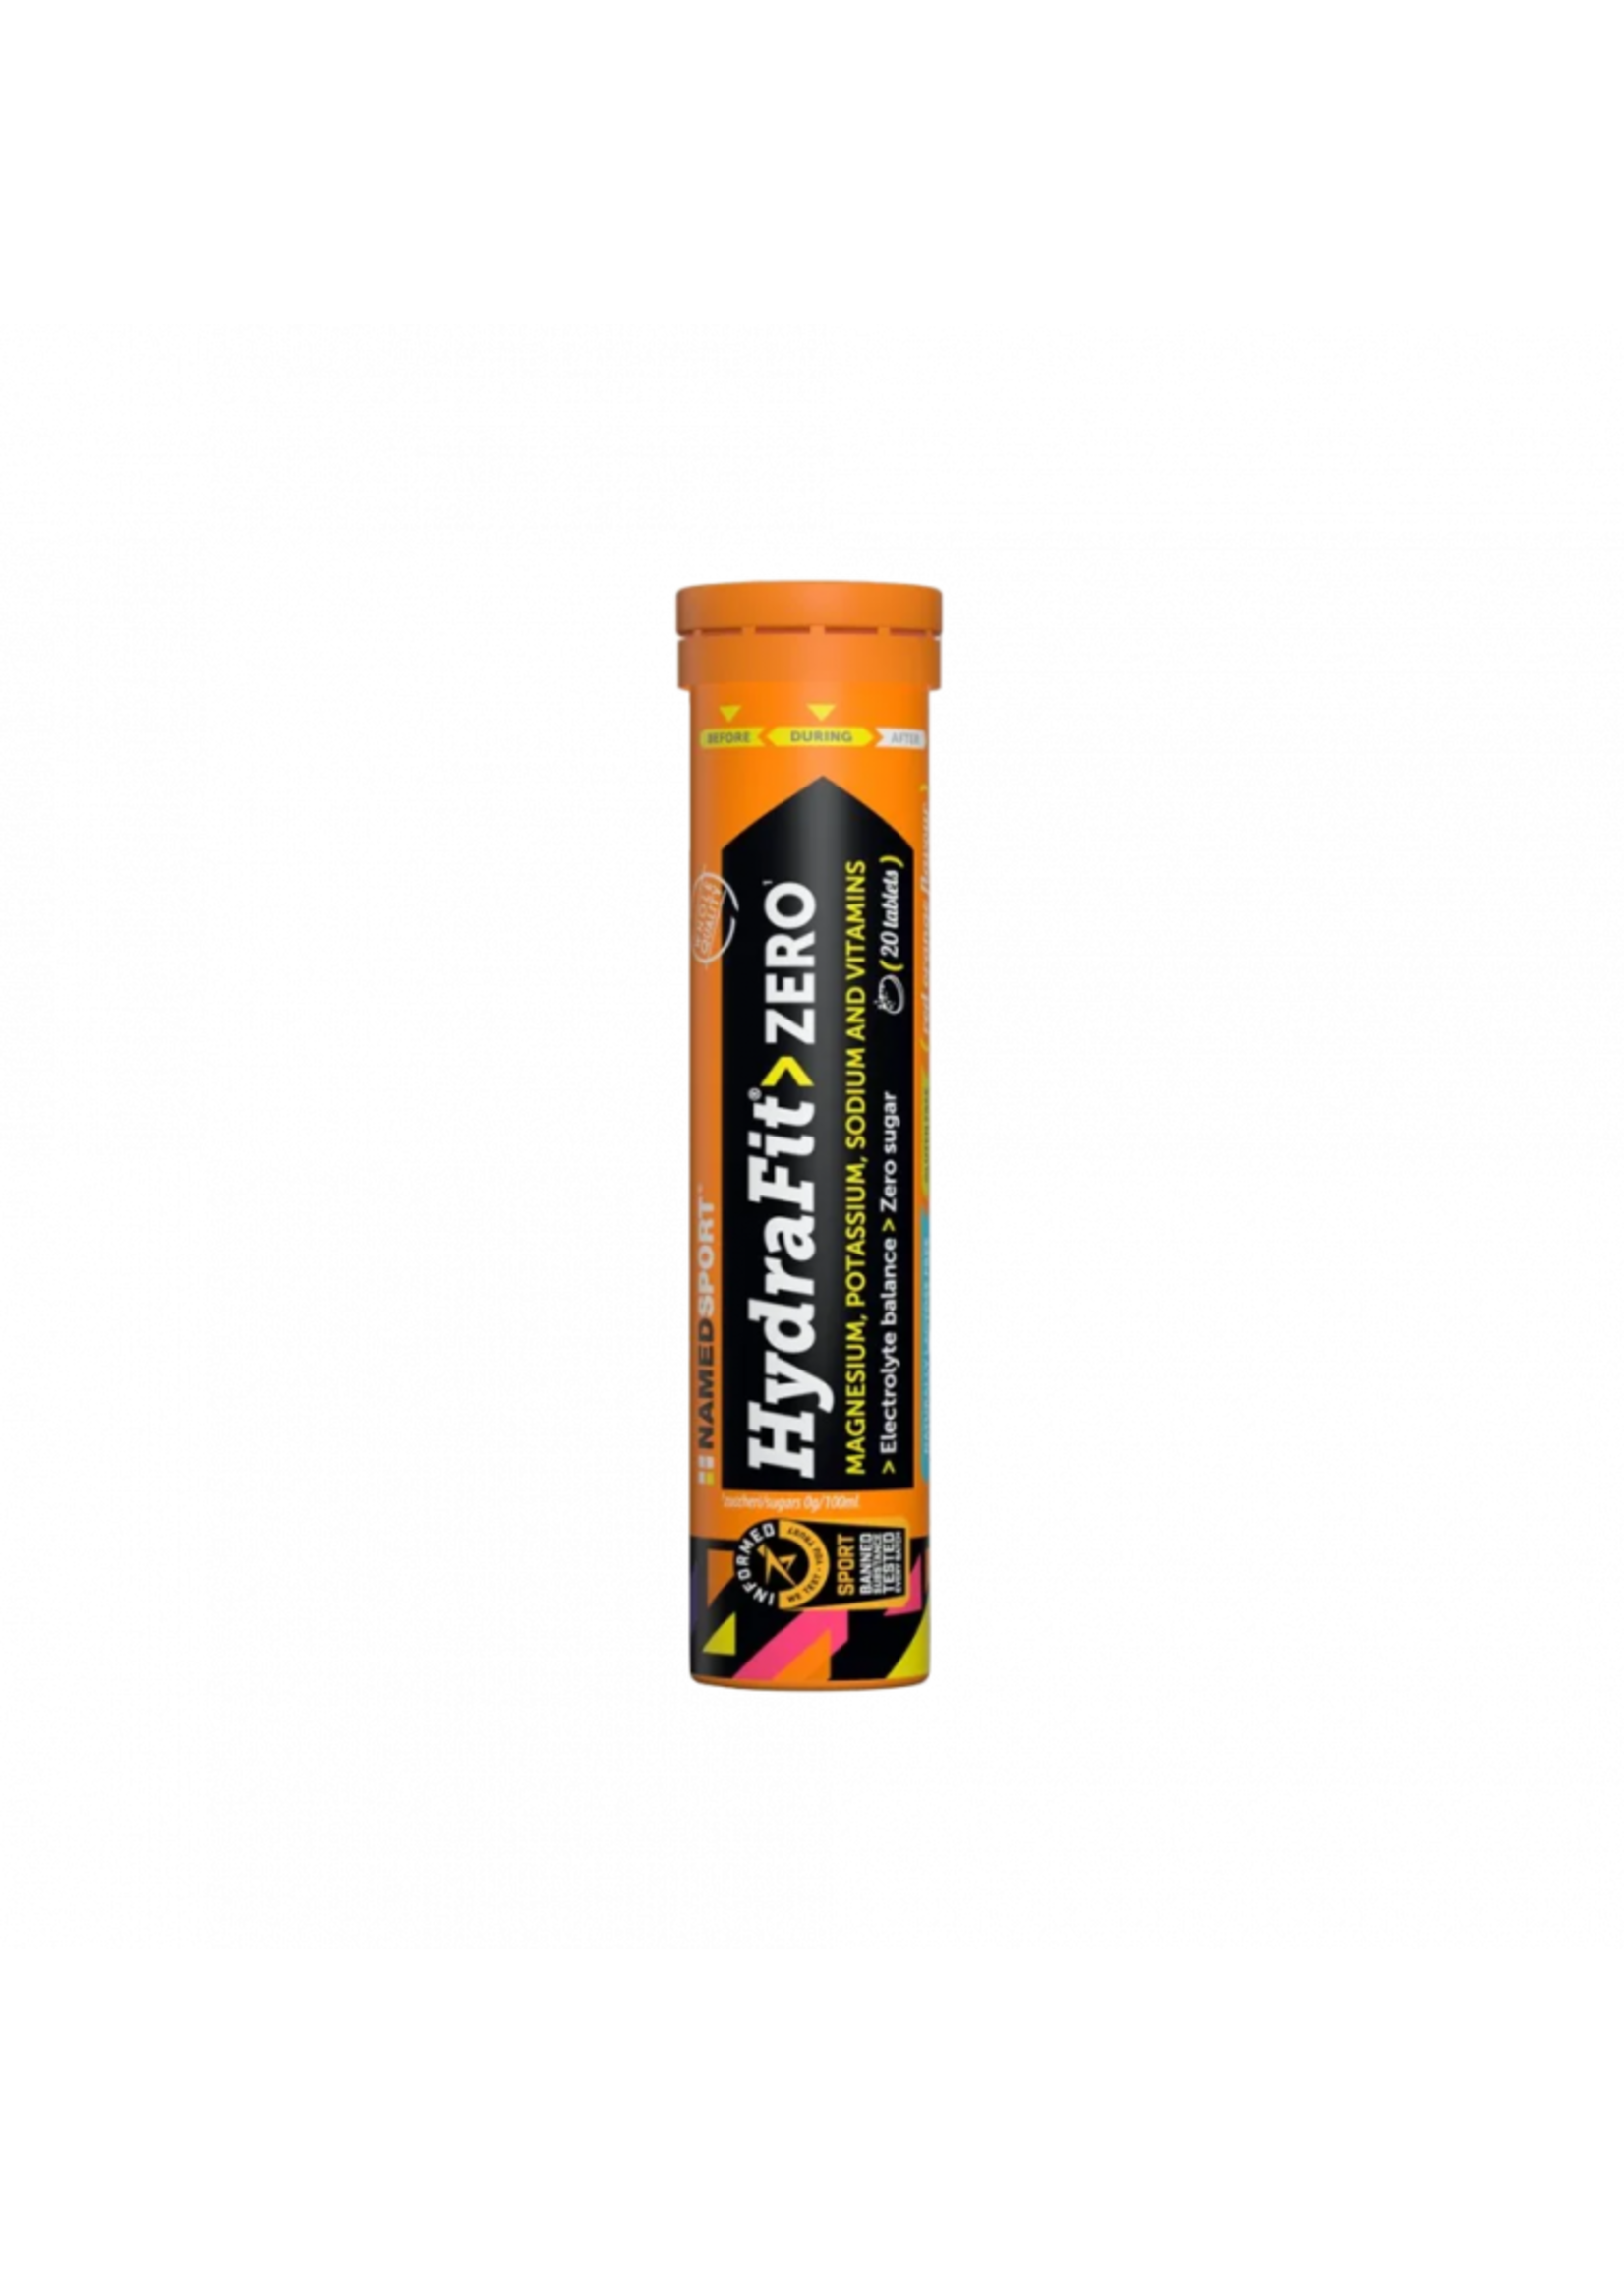 Named Sport NAMED SPORT - Hydrafit Zero - Capsules d'électrolytes - Orange sanguine